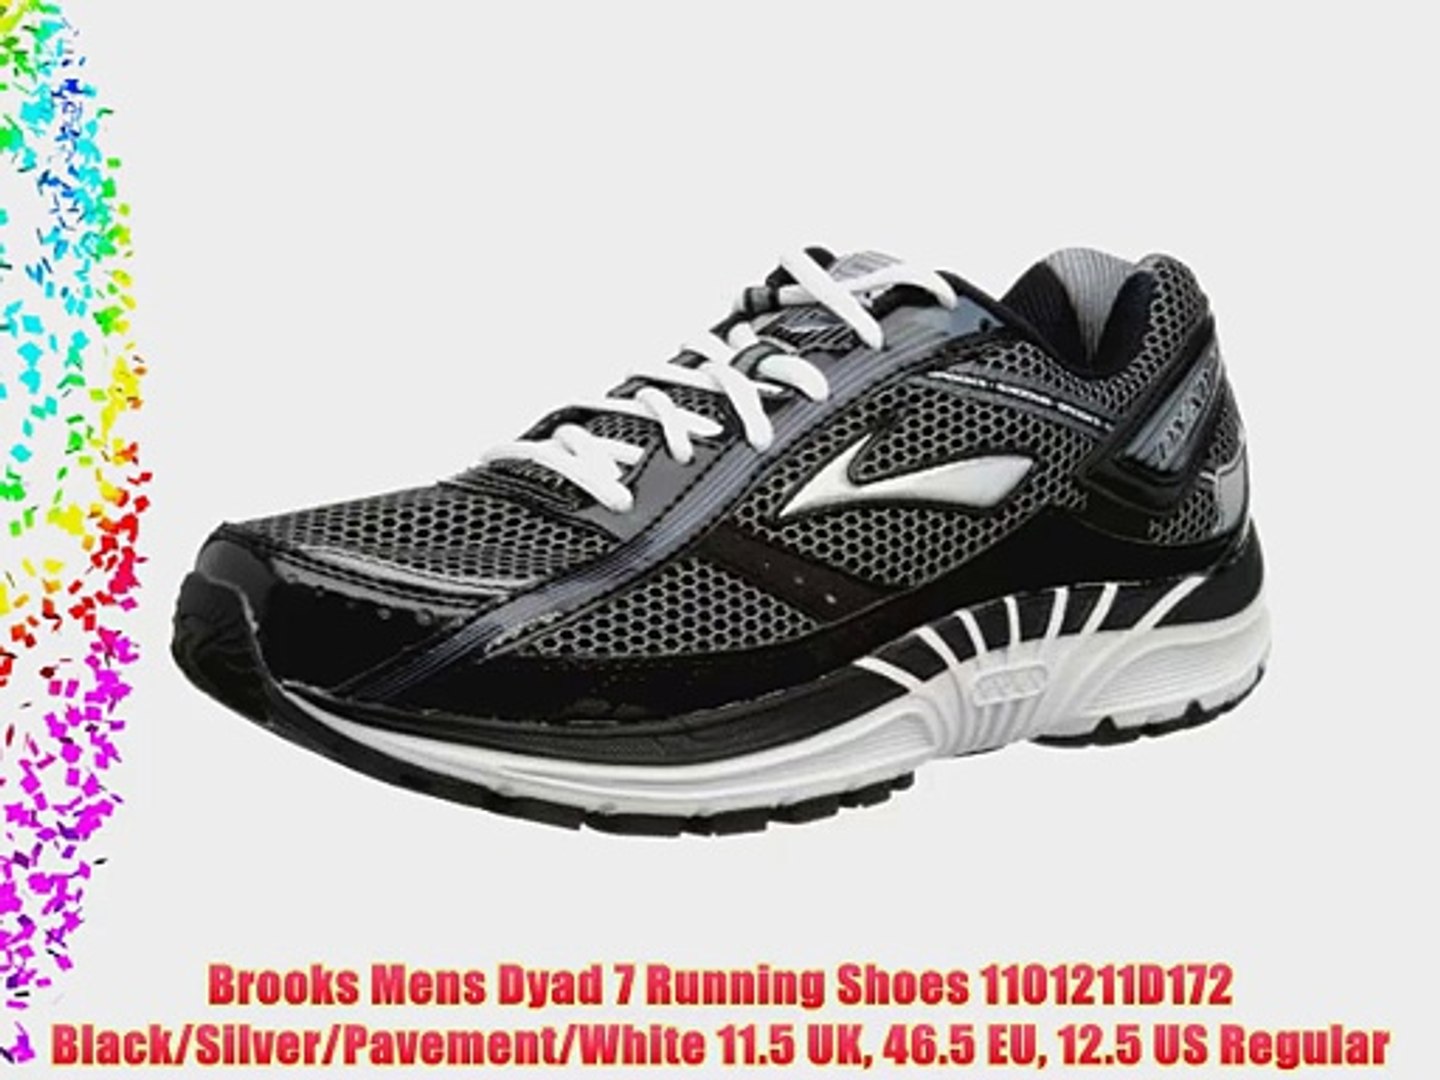 brooks men's adrenaline gts 19 running